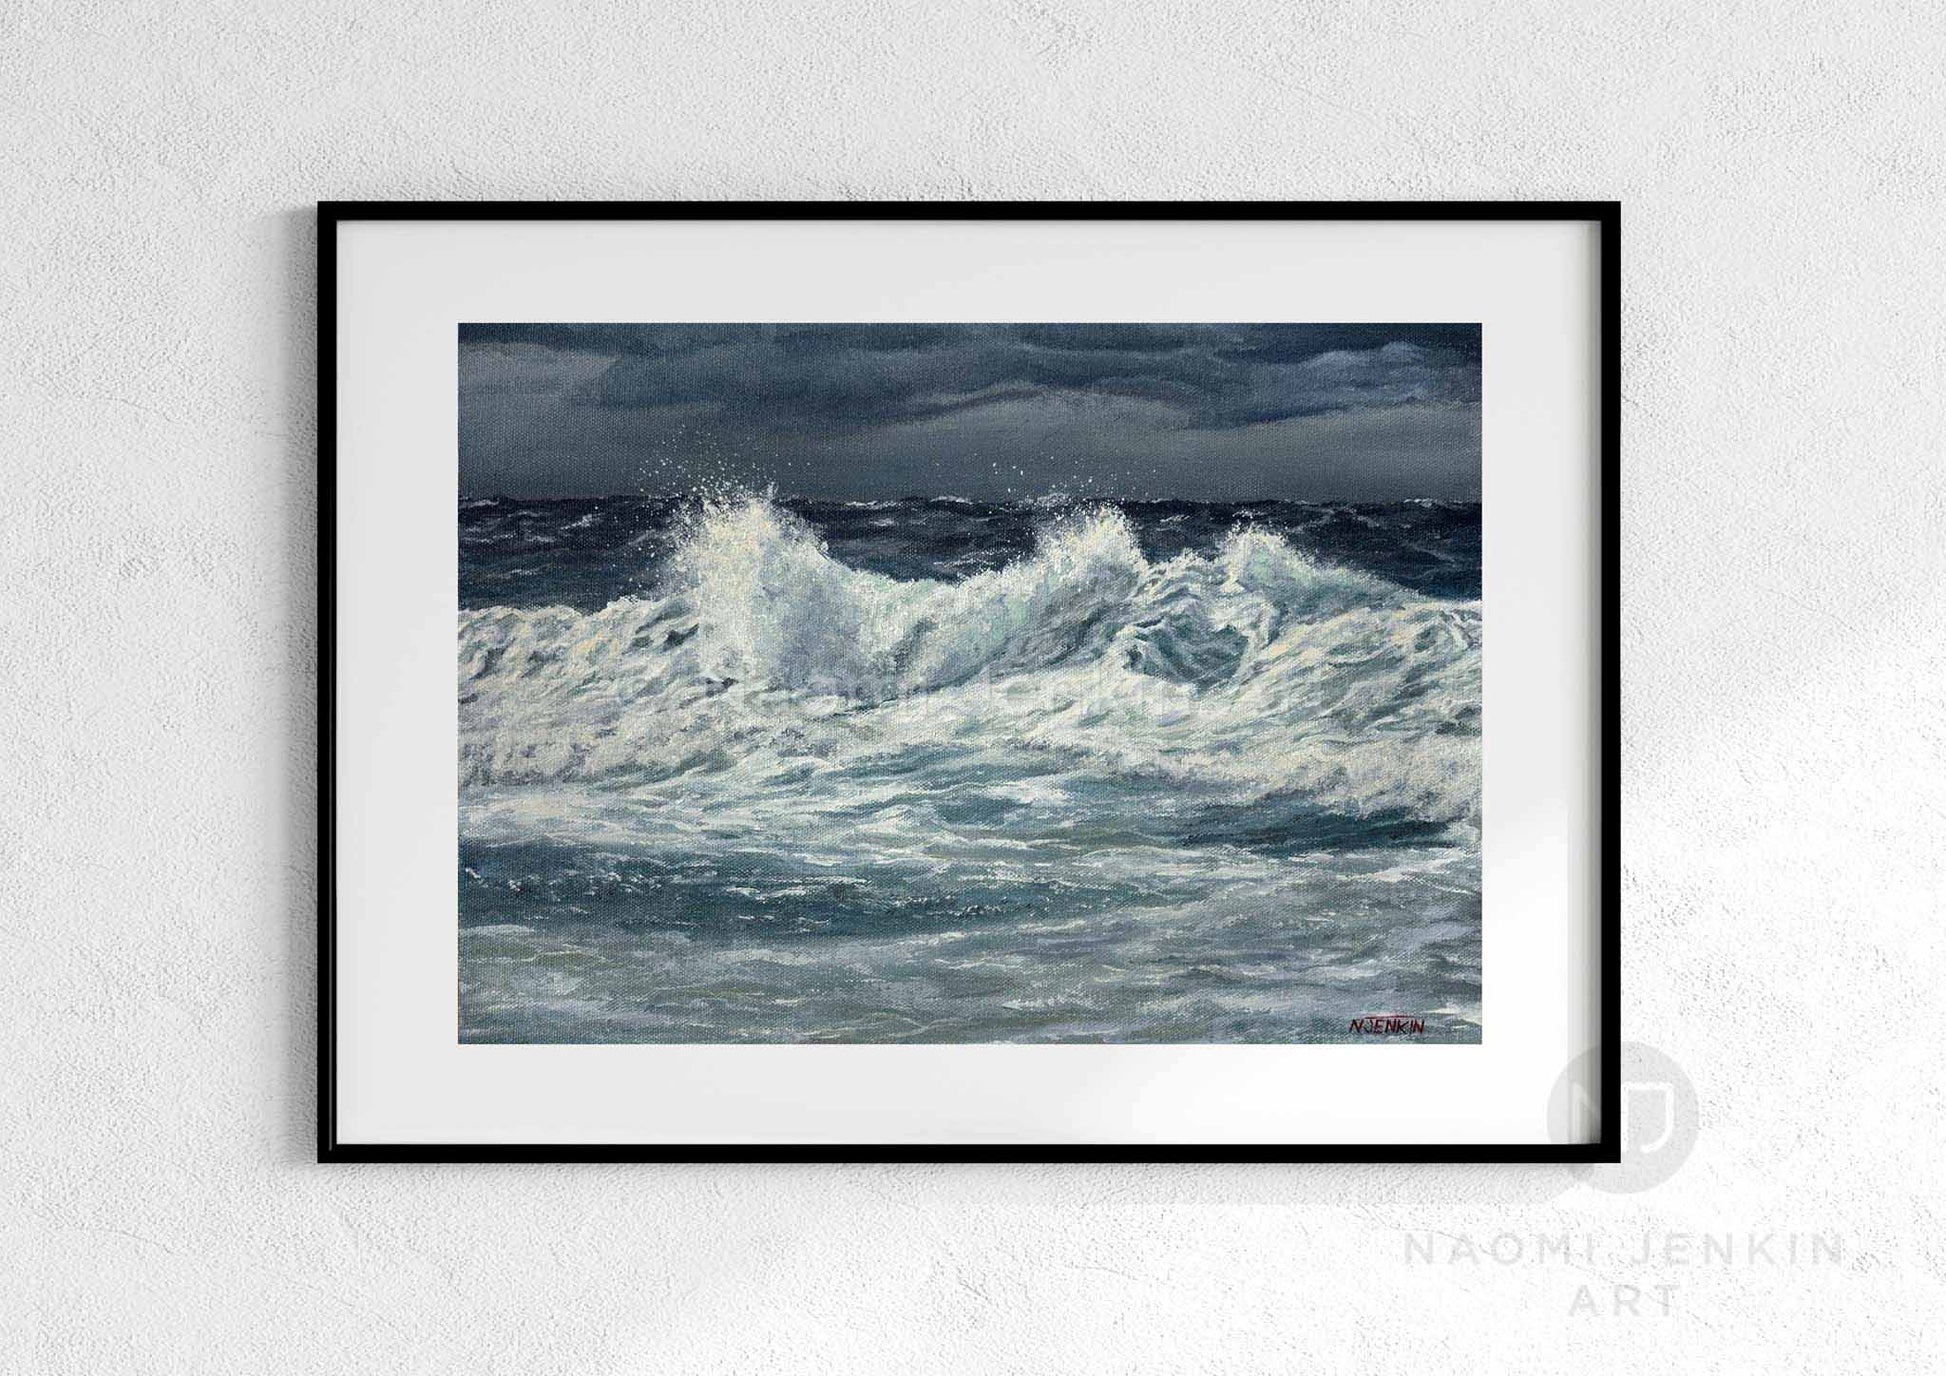 Wave prints by seascape artist Naomi Jenkin Art. 